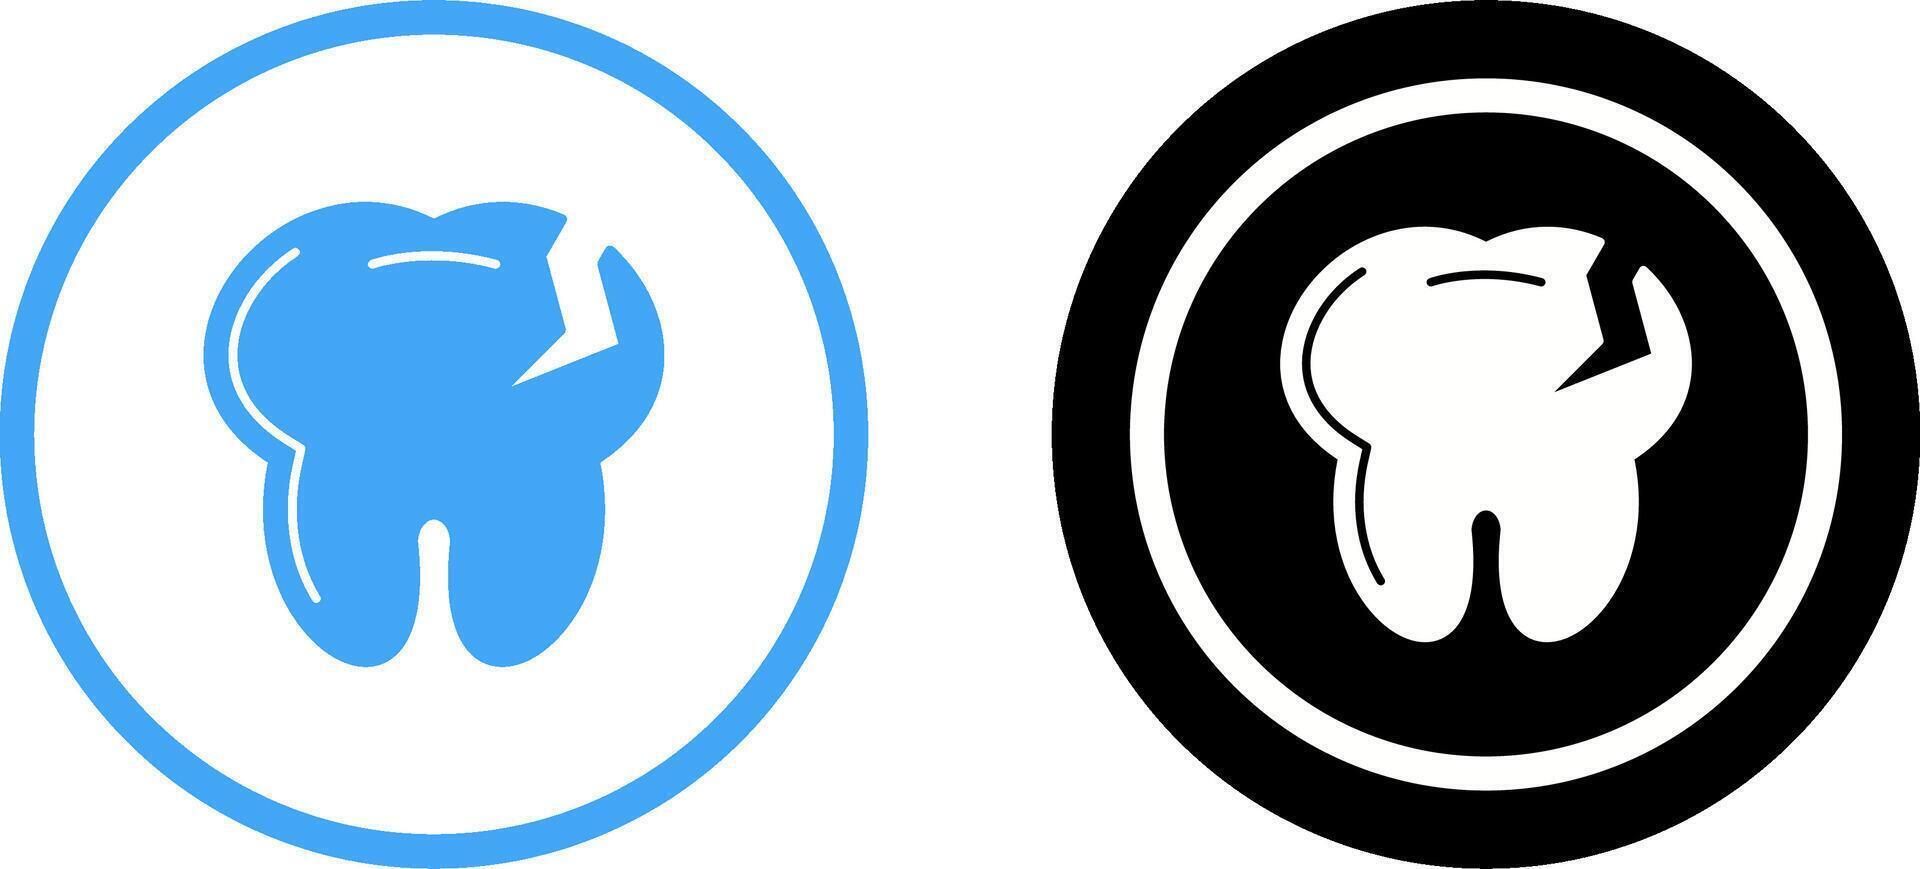 Tooth Icon Design vector